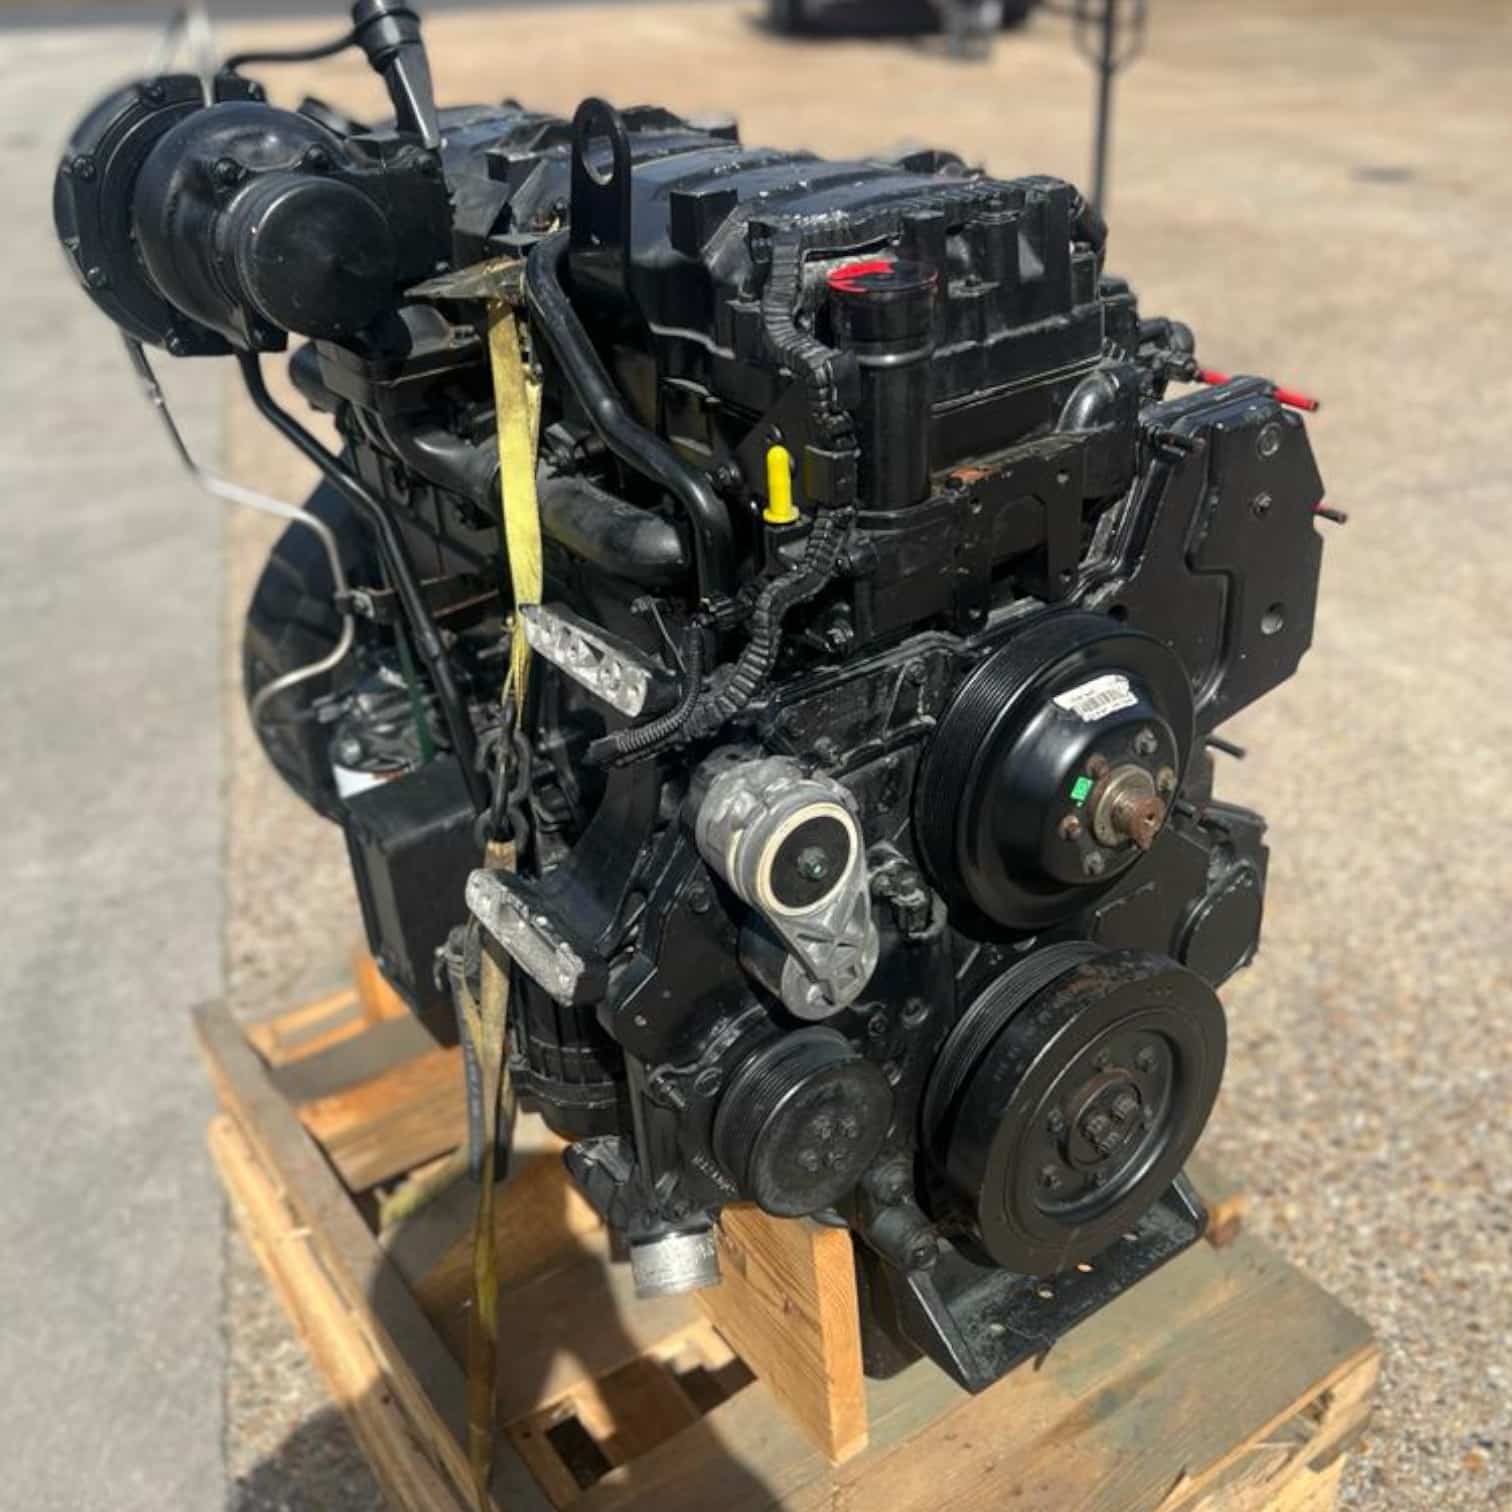 Perkins ETAG motor engine